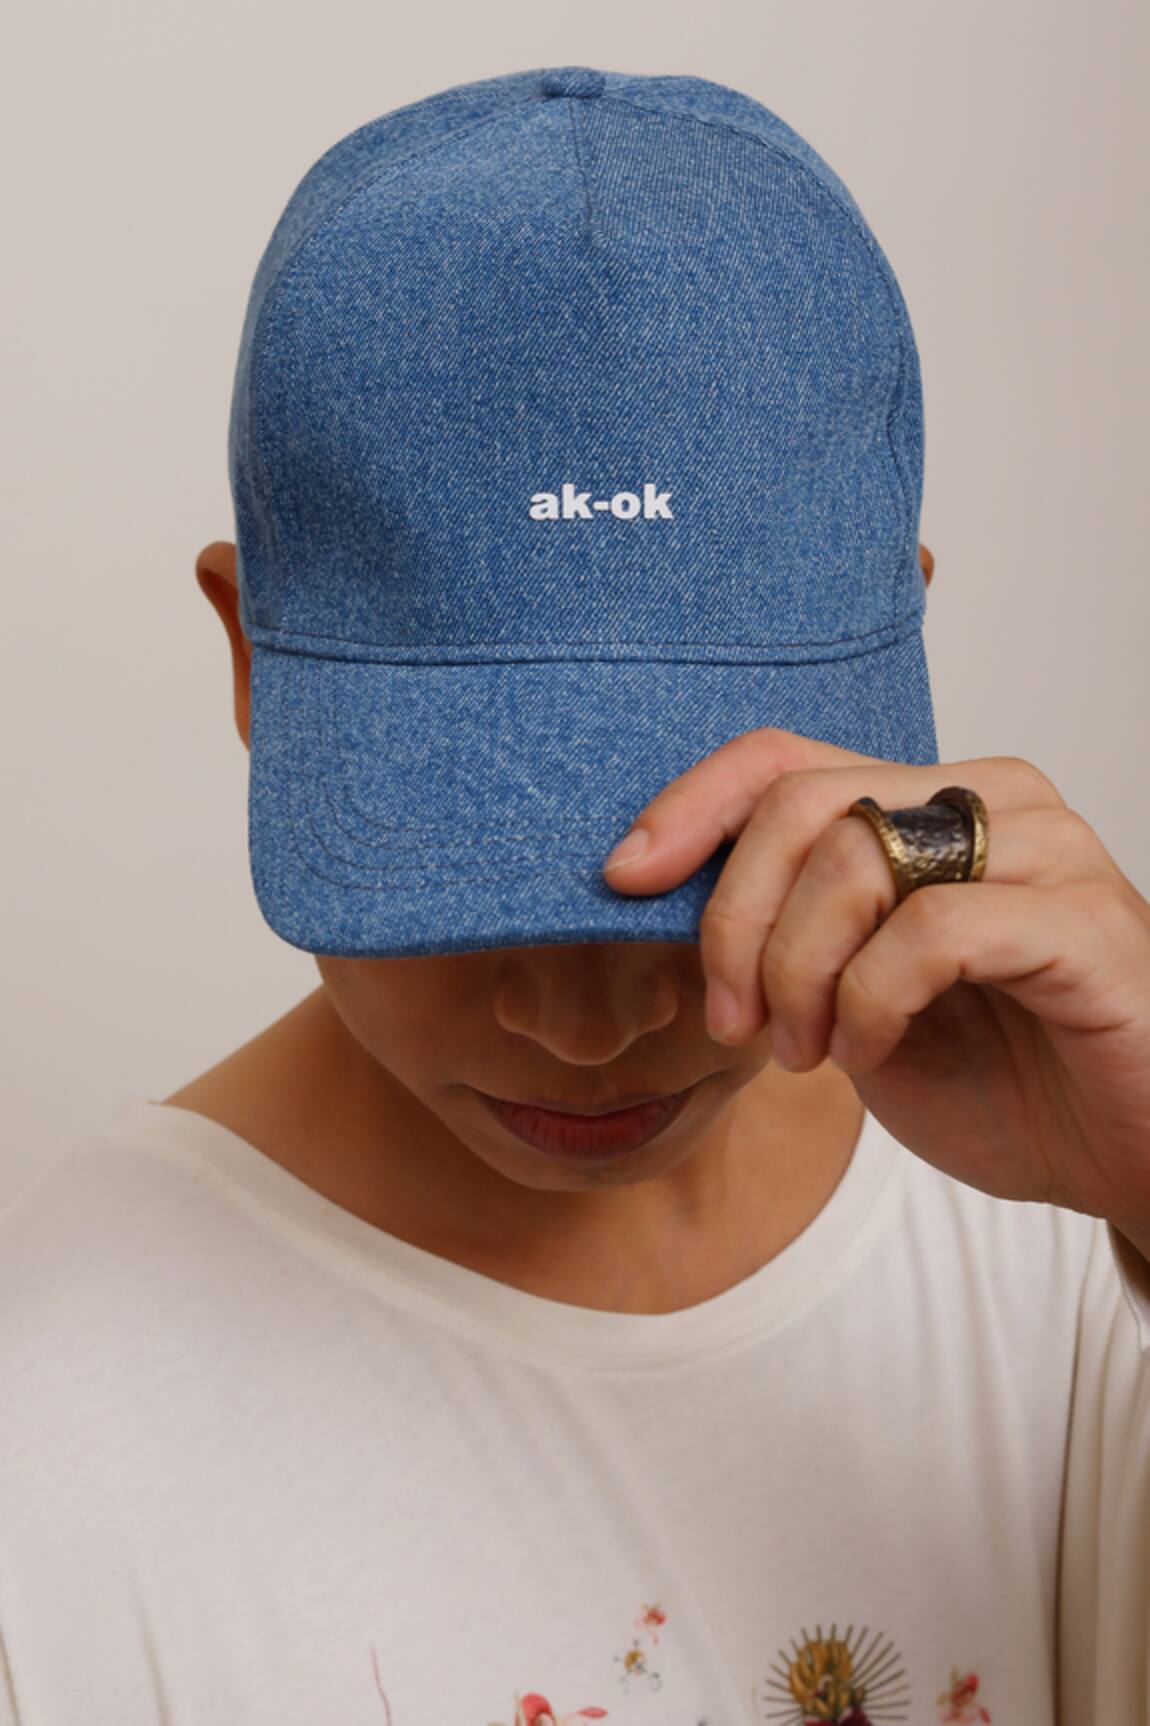 AK-OK - Blue Denim Typographic Print Baseball Cap